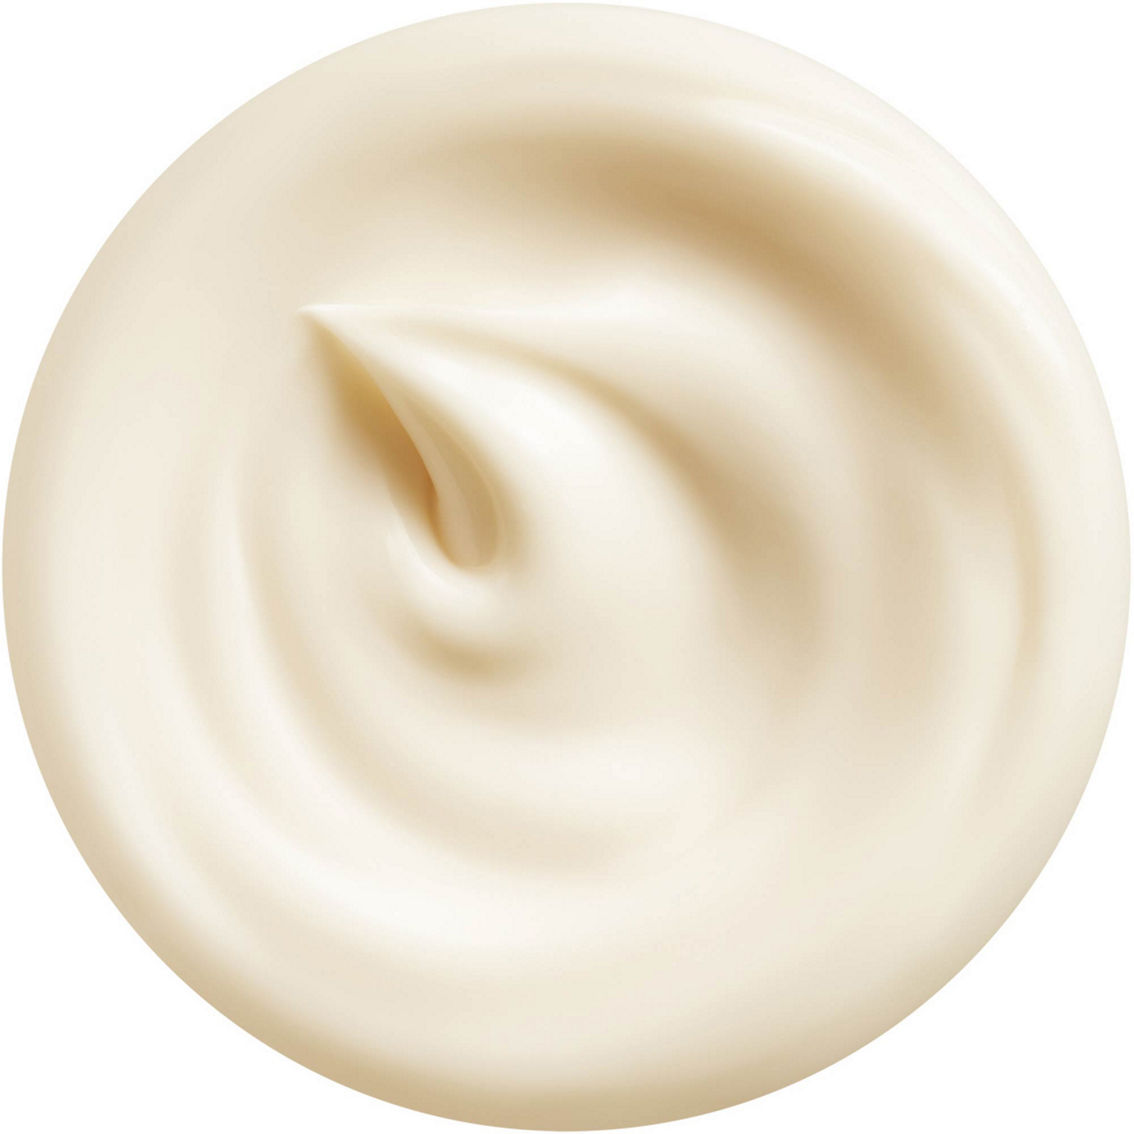 Shiseido Vital Perfection Intensive WrinkleSpot Treatment - Image 3 of 8